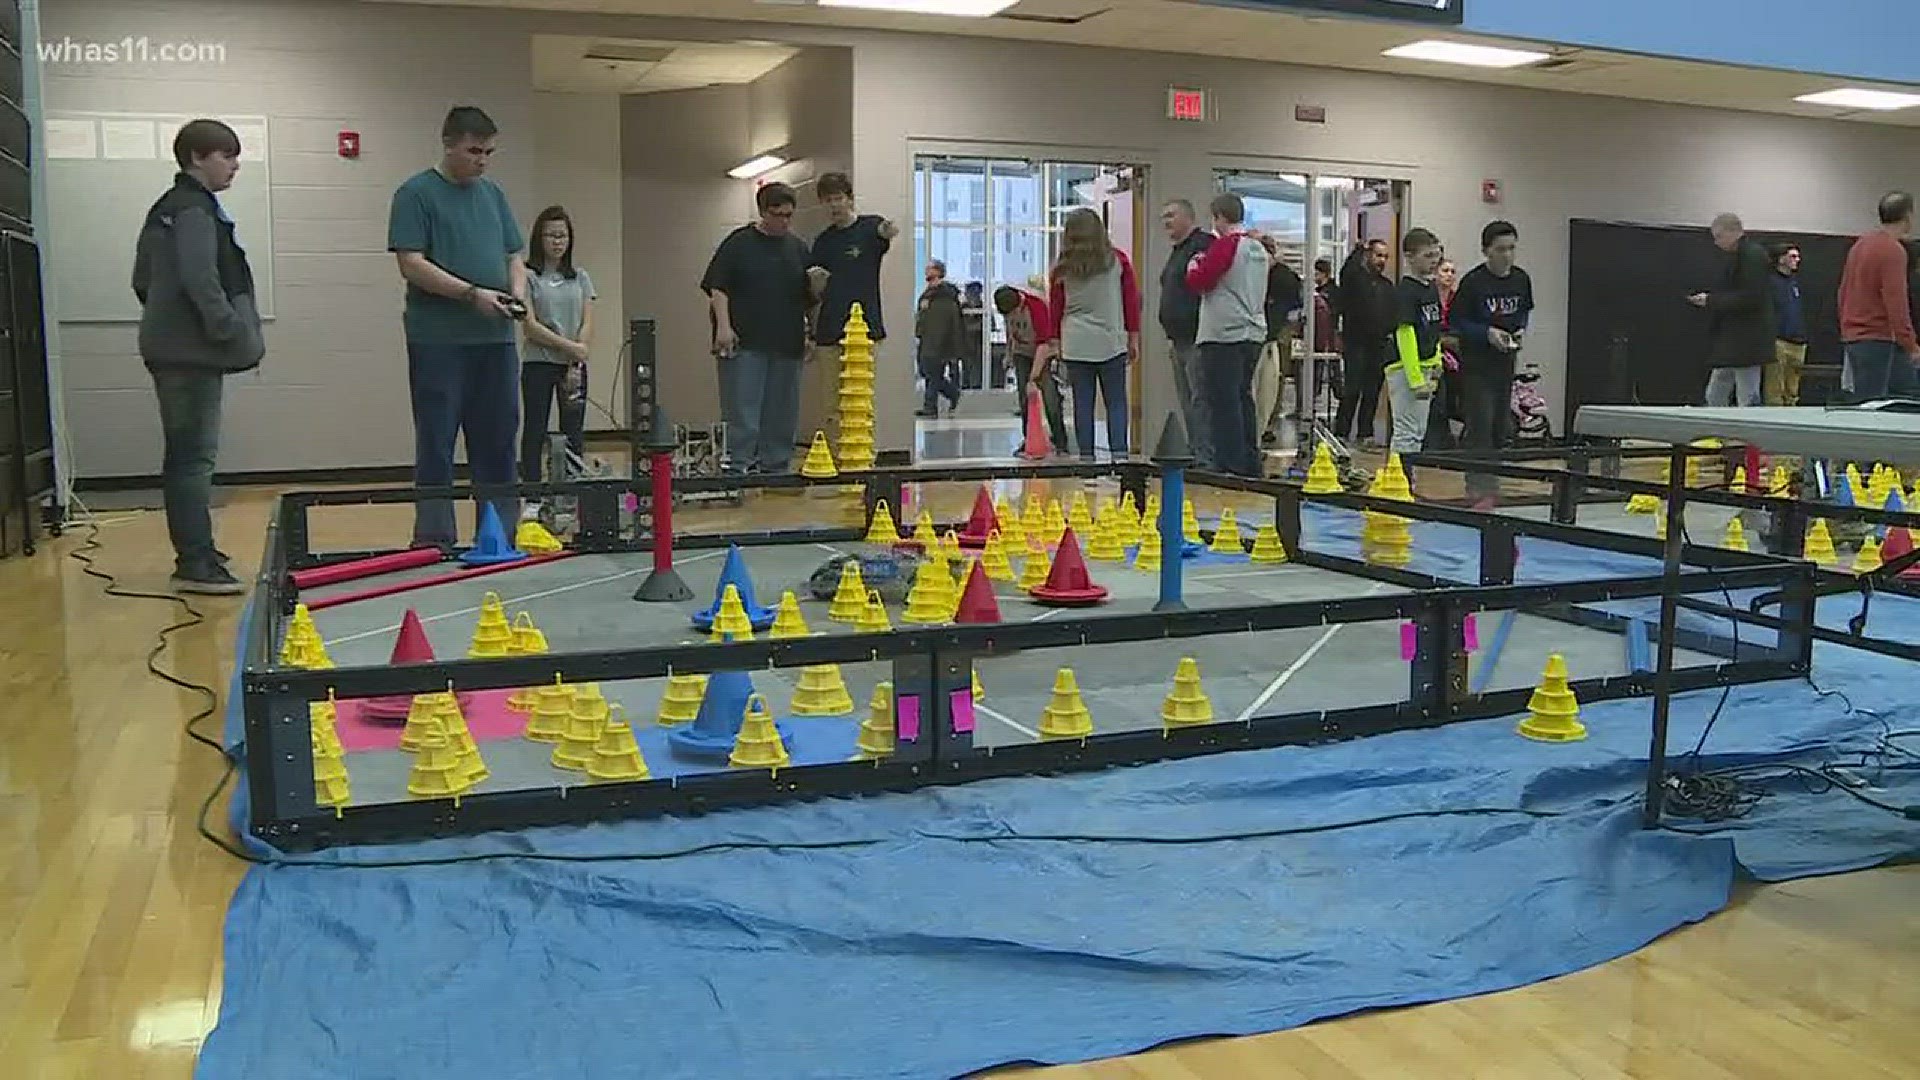 Vex Robotics competition comes to Kentucky